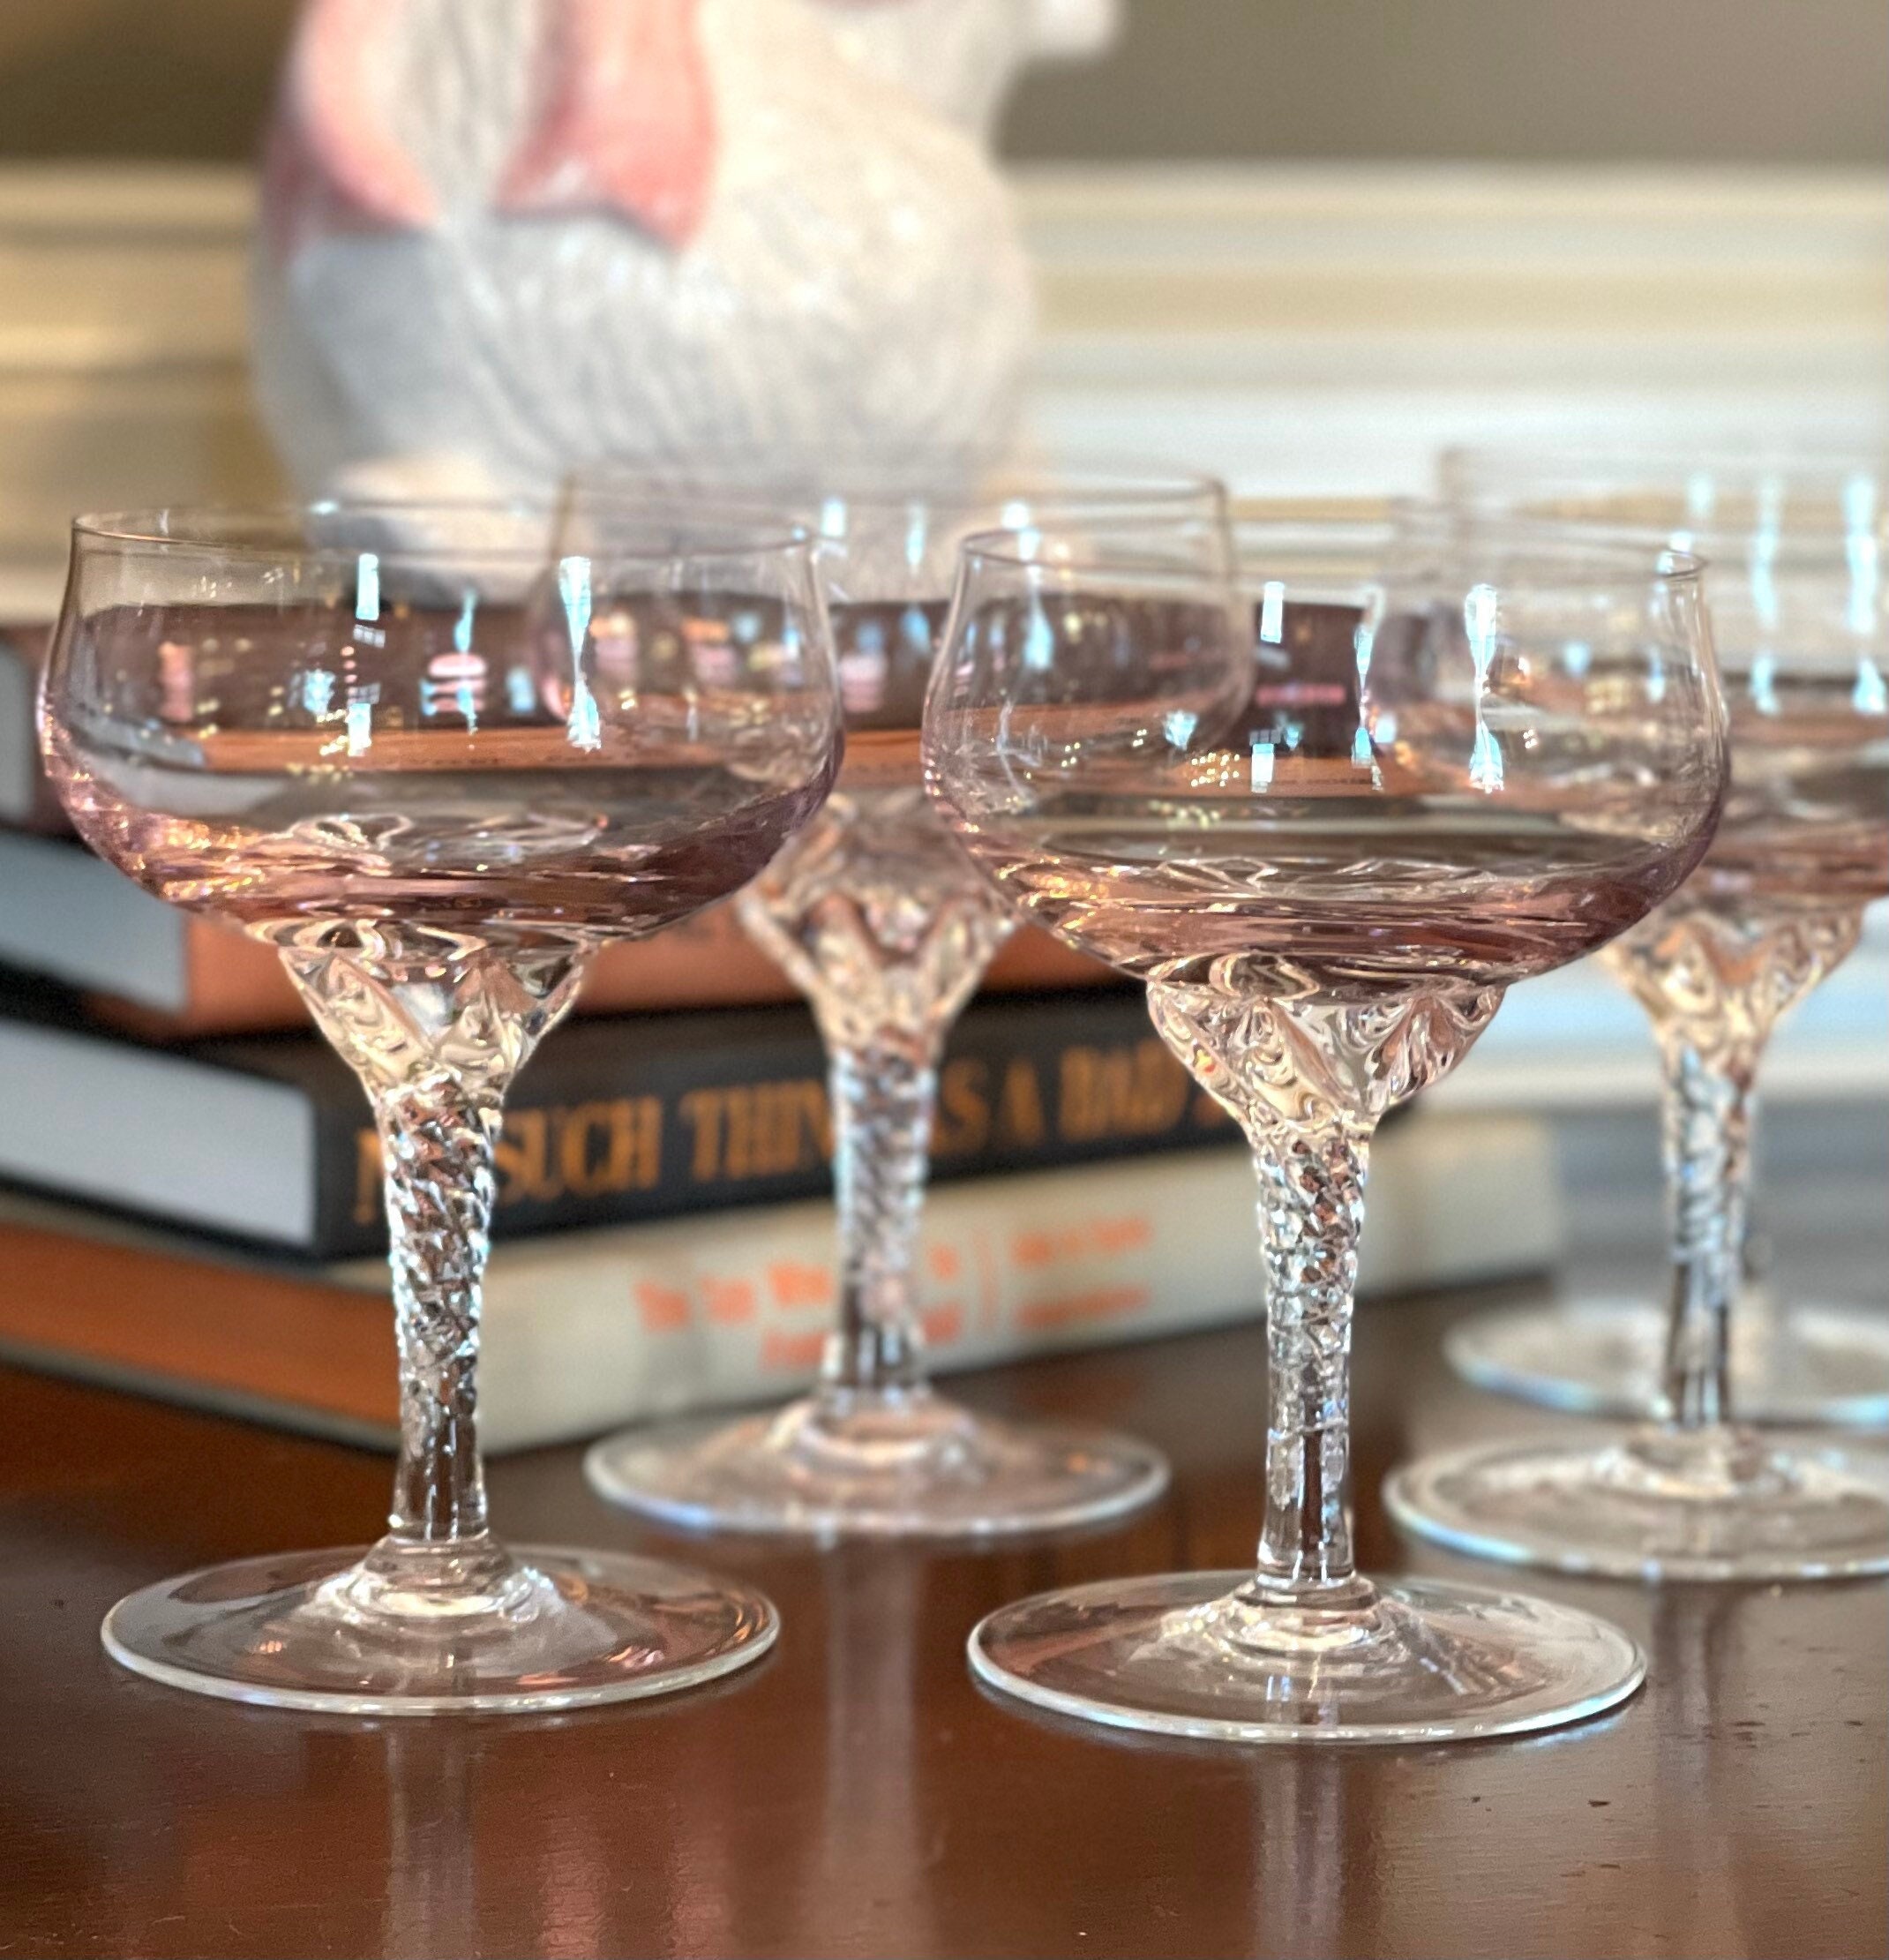 REAWOW Pink Champagne Glasses 5 OZ Champagne Coupe Glasses  Classic Cocktail Glassware Gilded Dessert Cup Creative Unique Gift Set of  2: Champagne Glasses